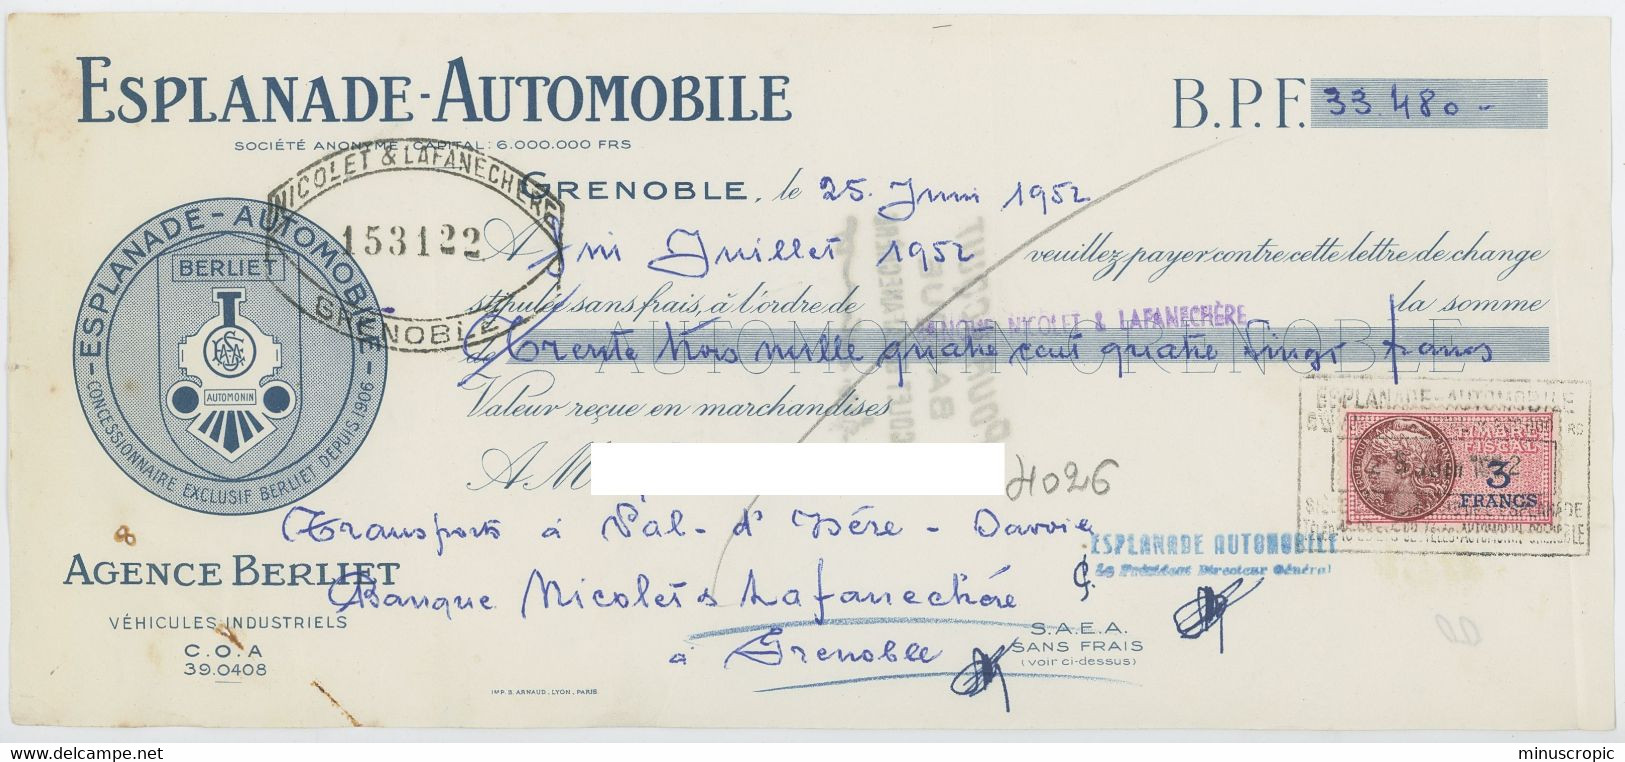 Un lot de 7 documents - Esplanade Automobile - Grenoble - Agence Berliet - 1952